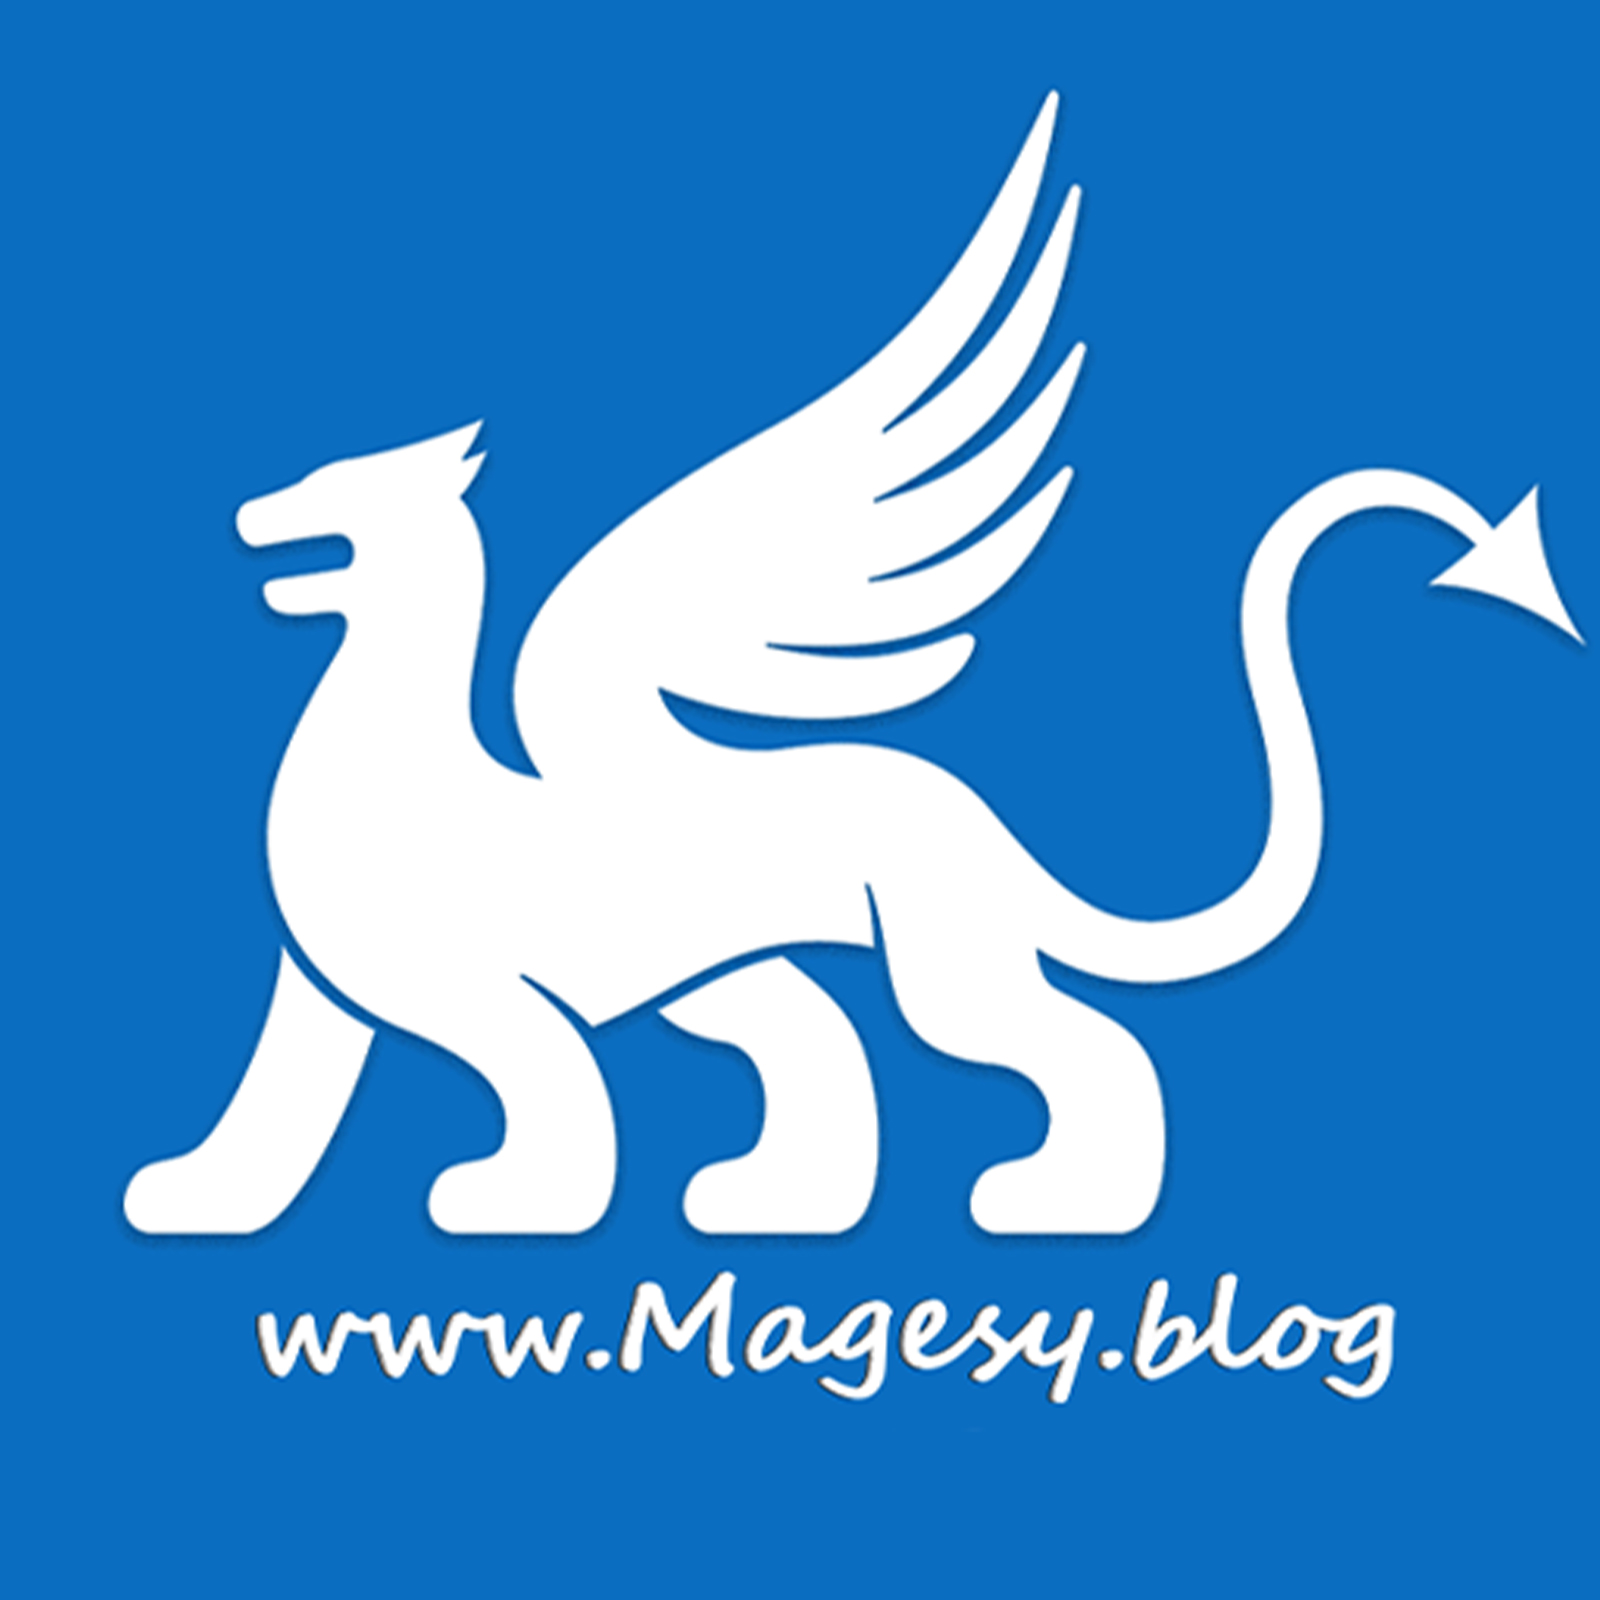 www.magesy.blog